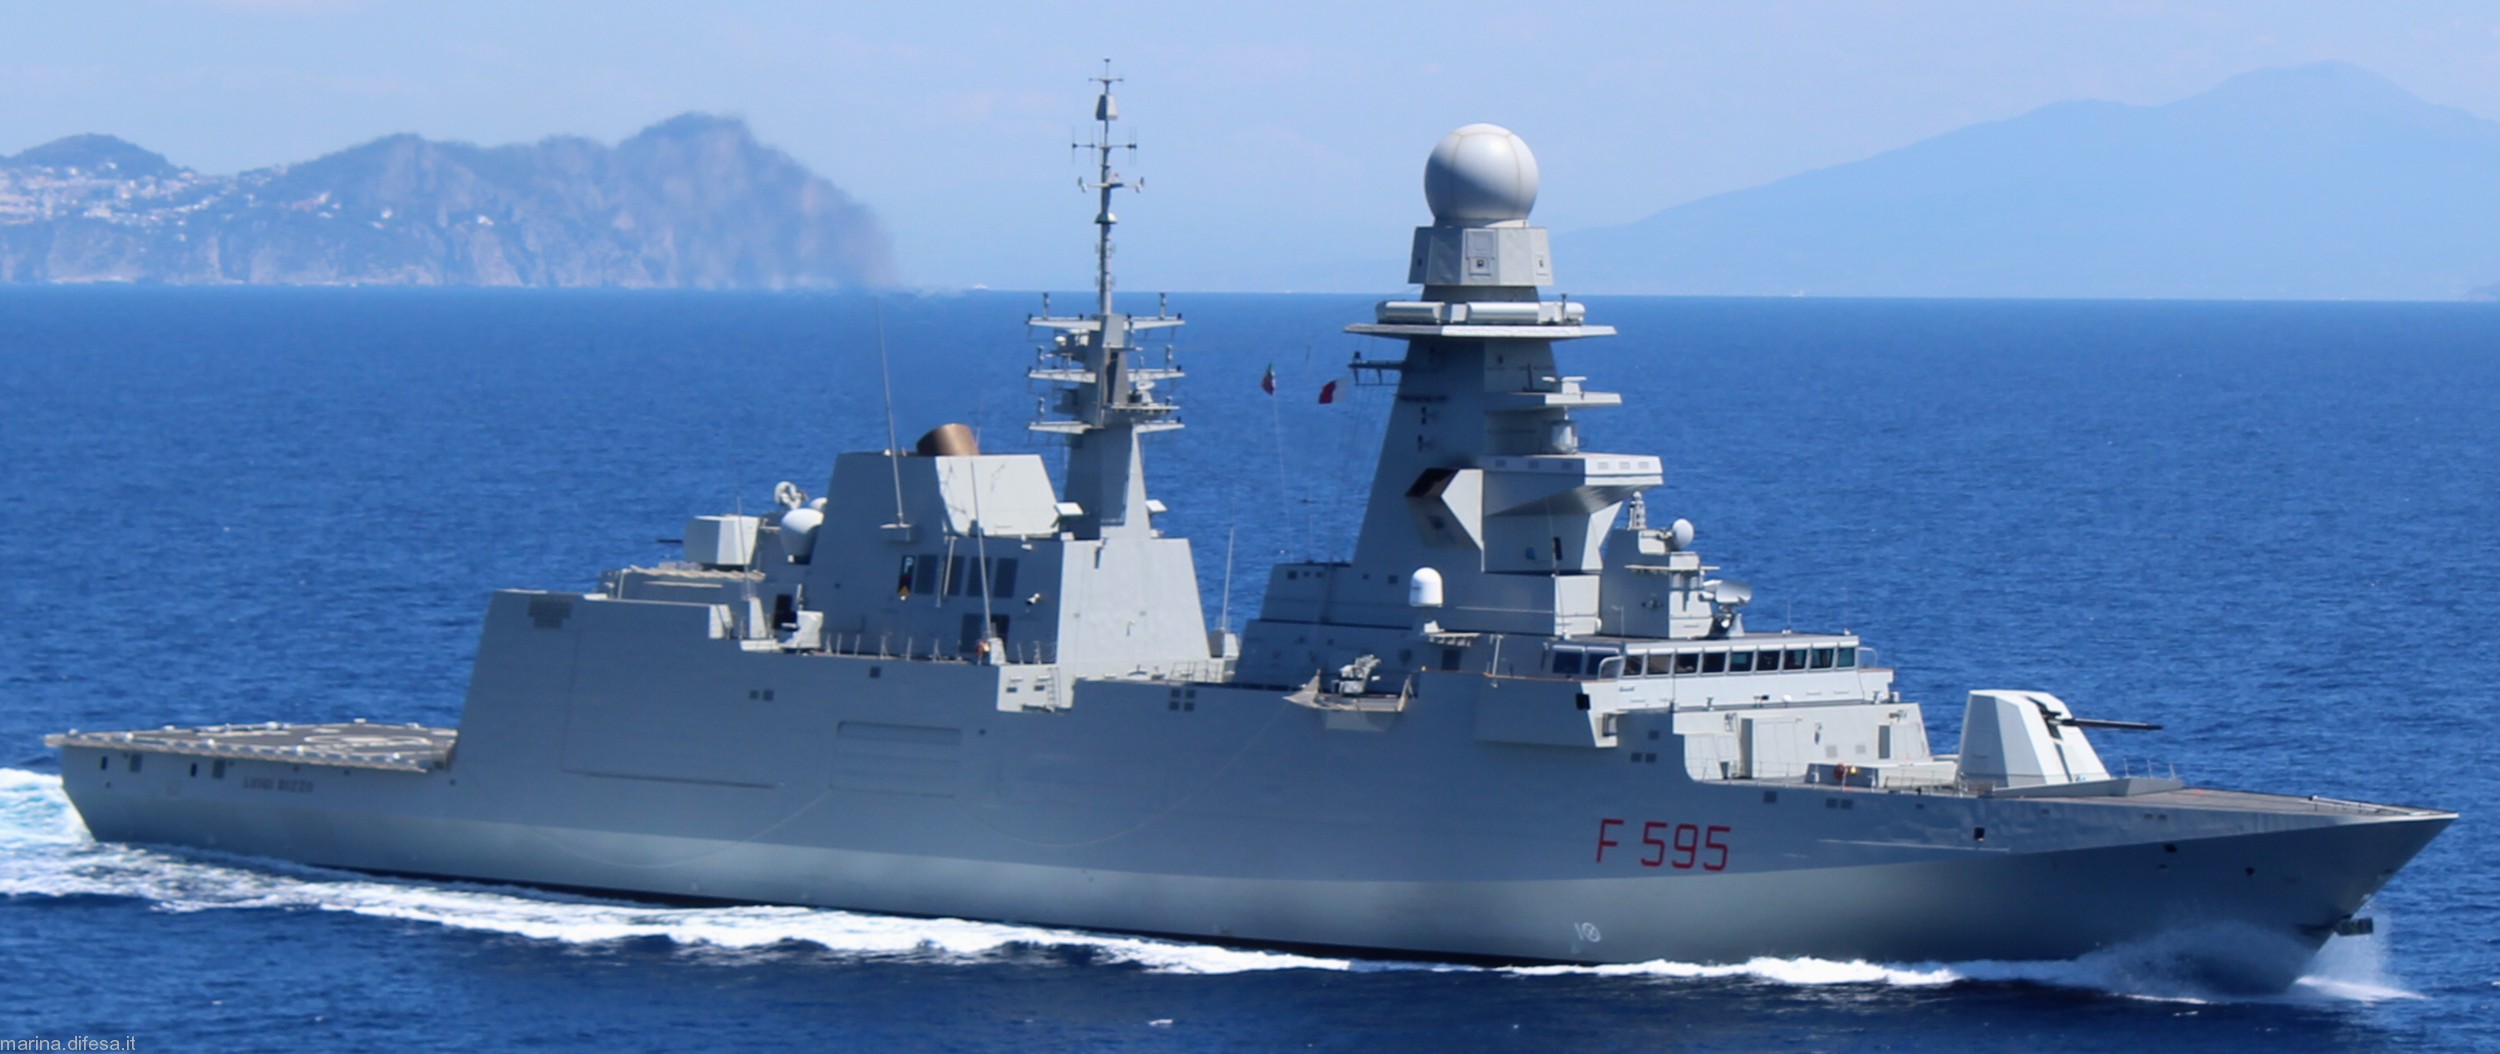 f-595 luigi rizzo its nave bergamini fremm class guided missile frigate italian navy marina militare 33